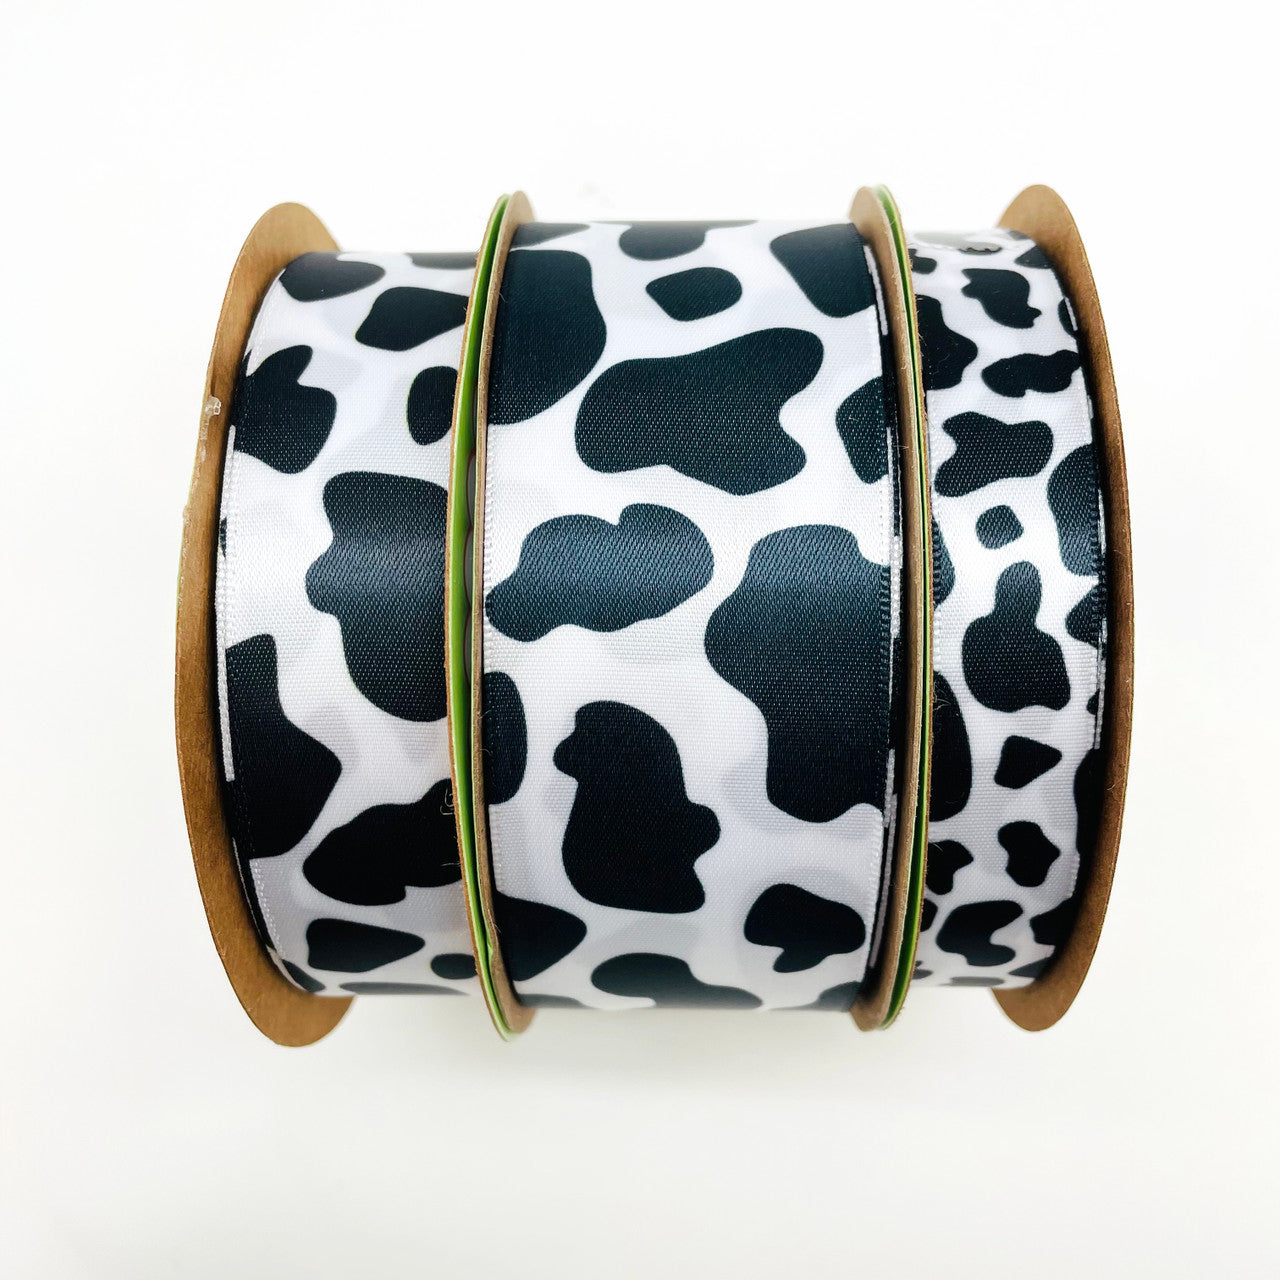 Qtmnekly 3Pcs White Black Cow Print Wired Edge Ribbon Craft Ribbons Gift  Wrapping Ribbon Animal Print Ribbon for Party 